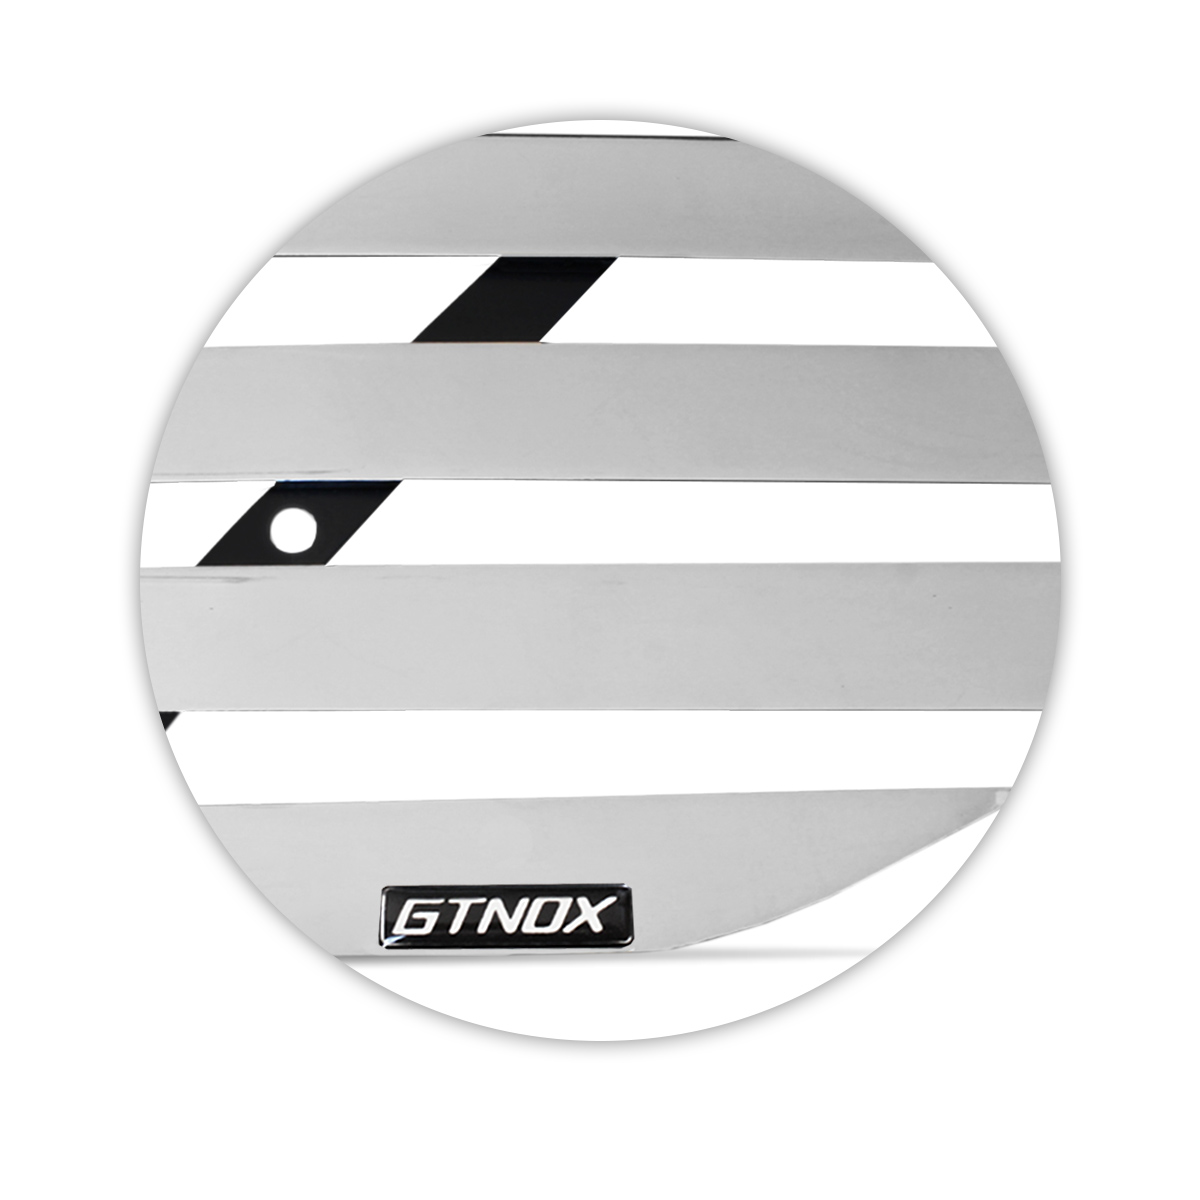 Sobre Grade L200 Triton XB 2011 a 2012 Aço Inox Elite